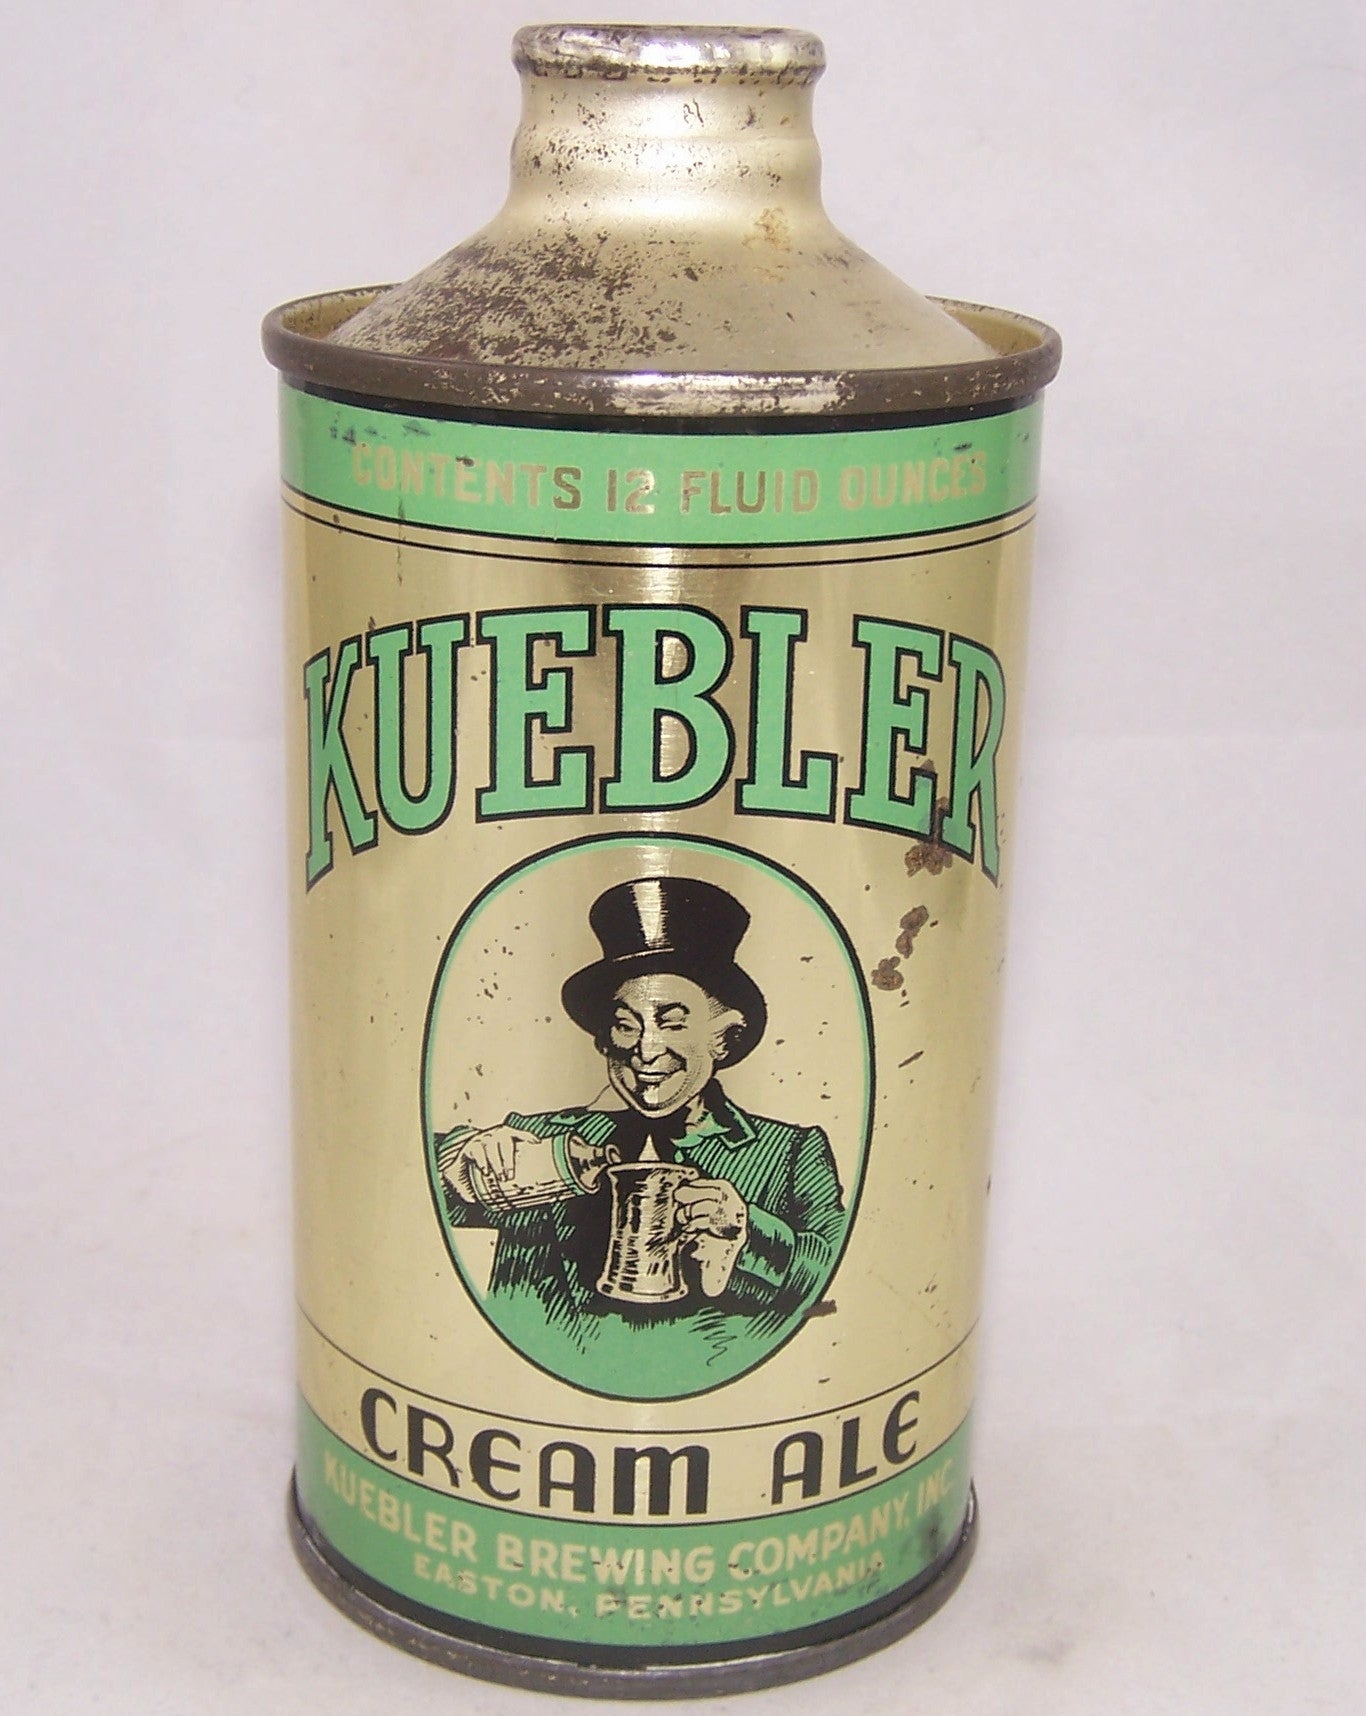 Kuebler Cream Ale, USBC 172-14, Grade 1/1- Sold on 03/05/17